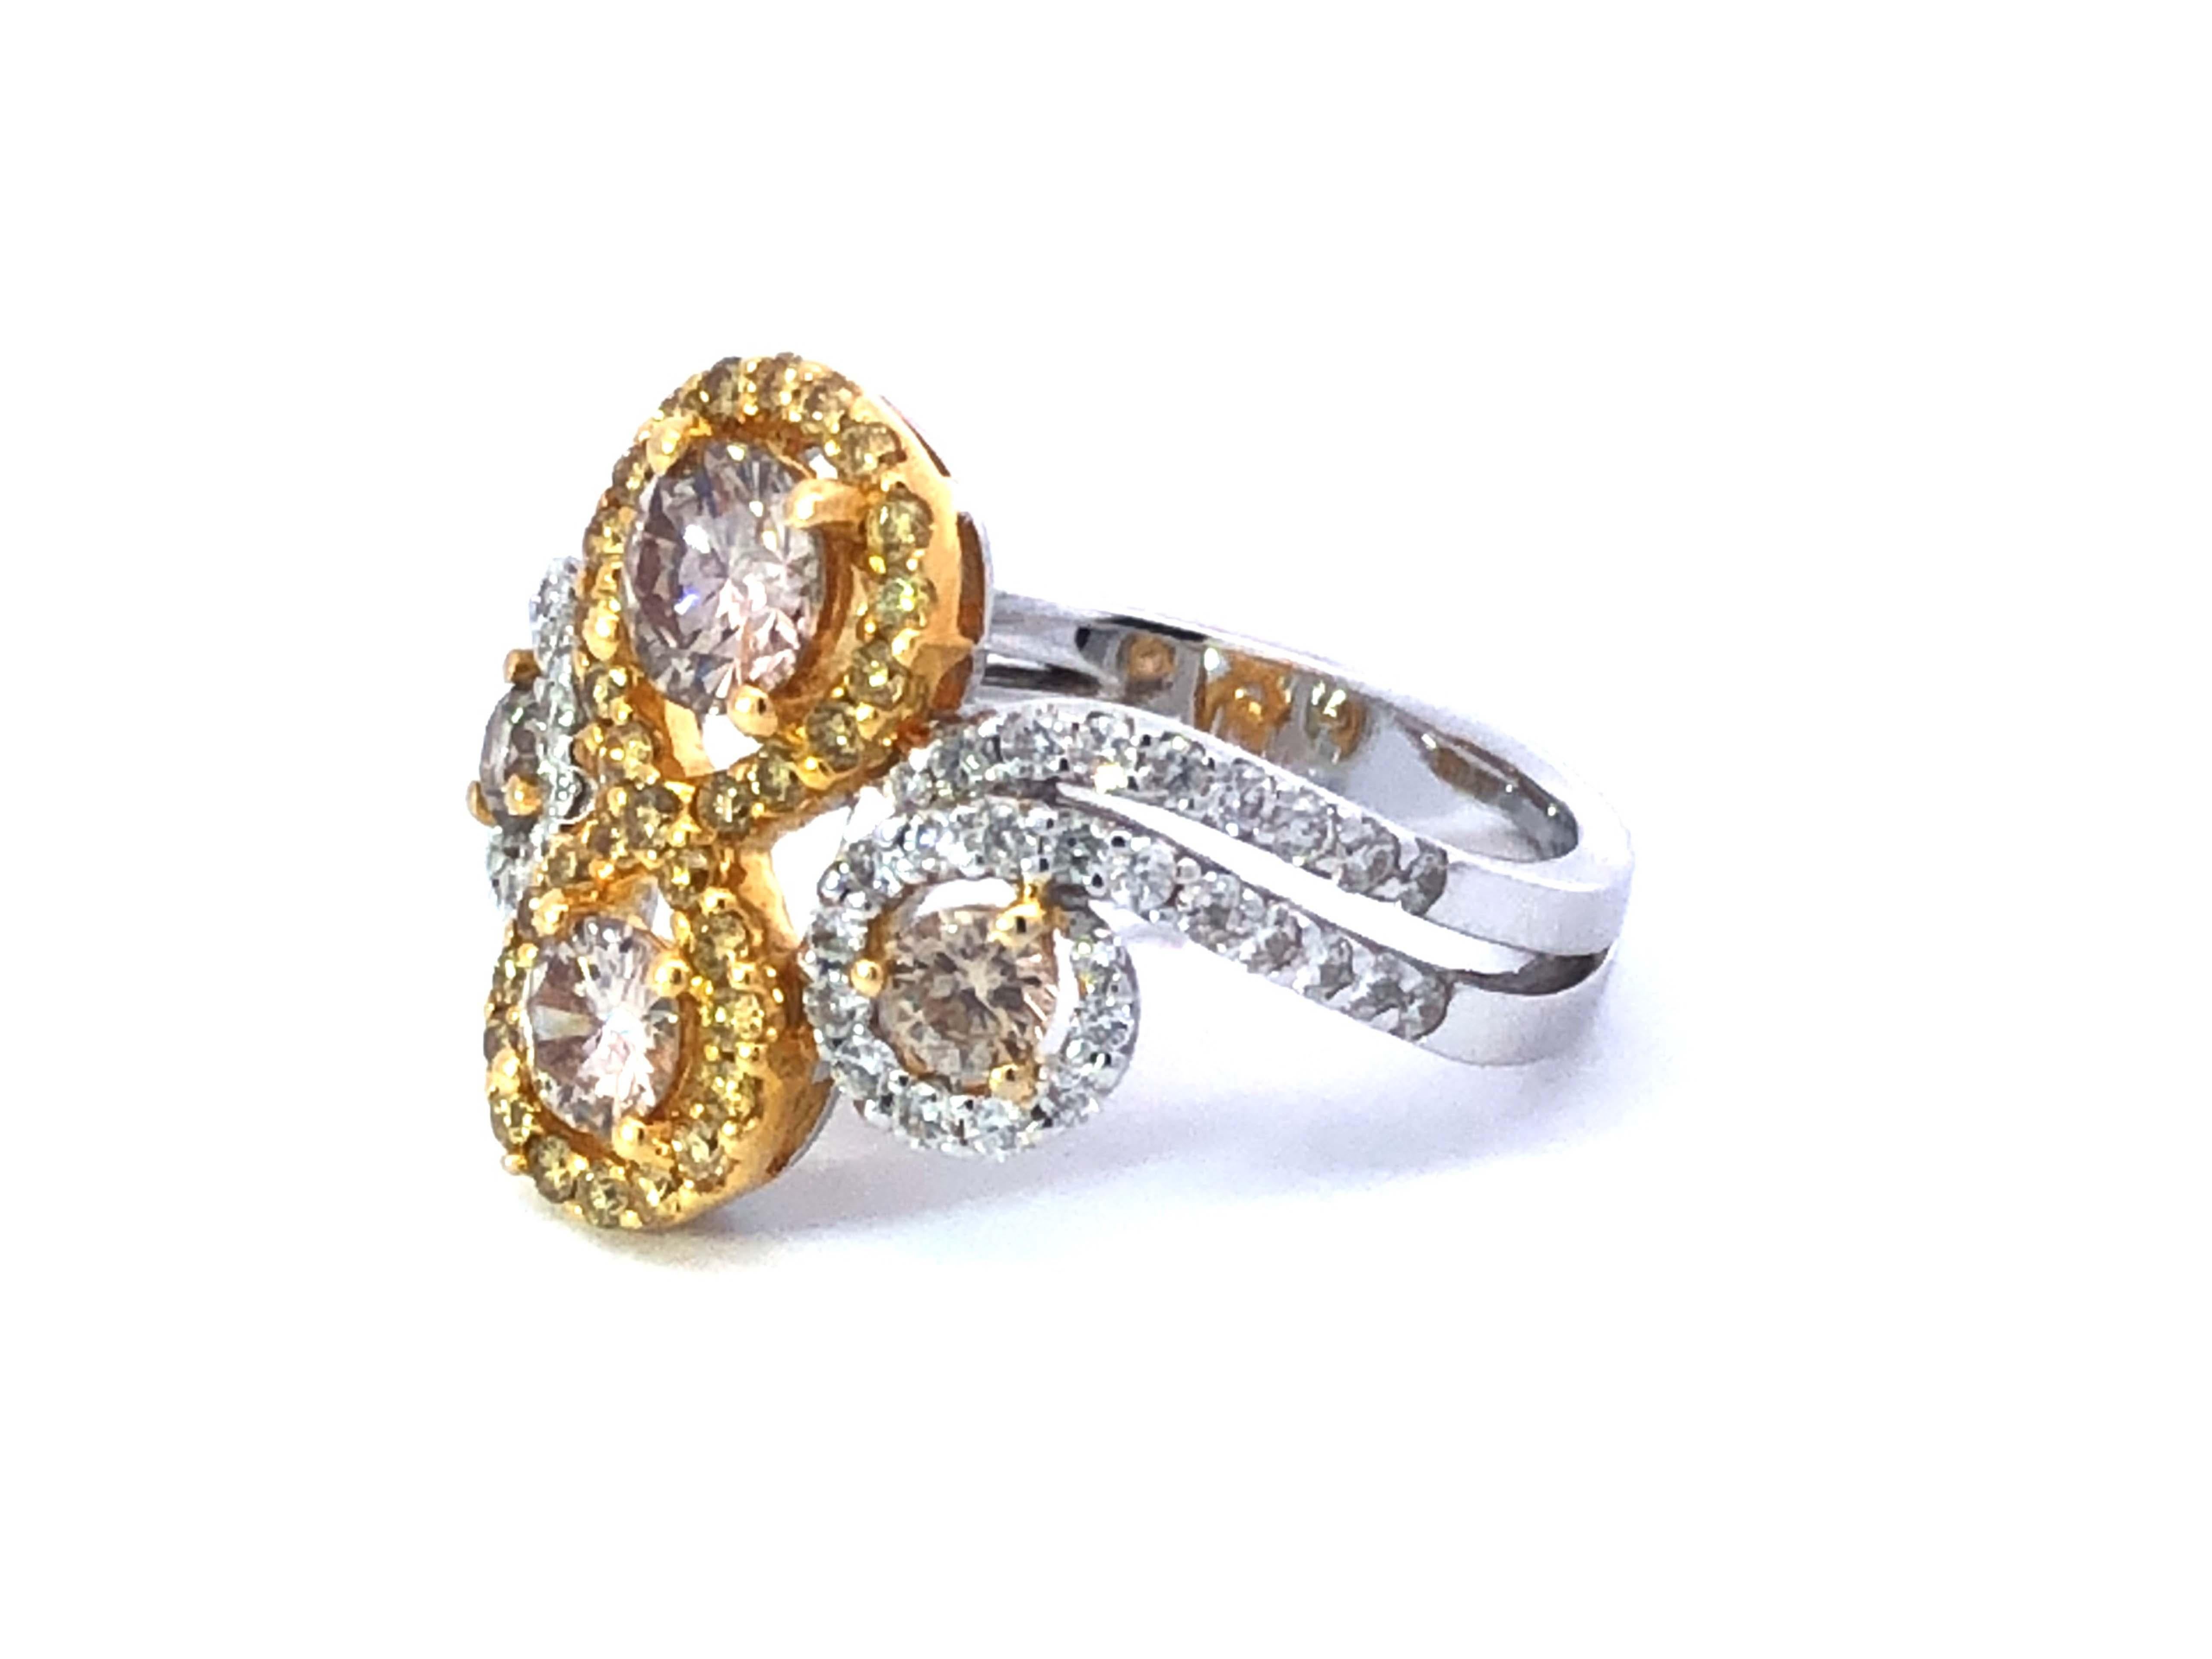 Art Nouveau Diamond Engagement Ring, Pretty 4 Stone Diamond Ring in Unique  Pierced Geometric Design, 18 Carat Platinum. - Addy's Vintage